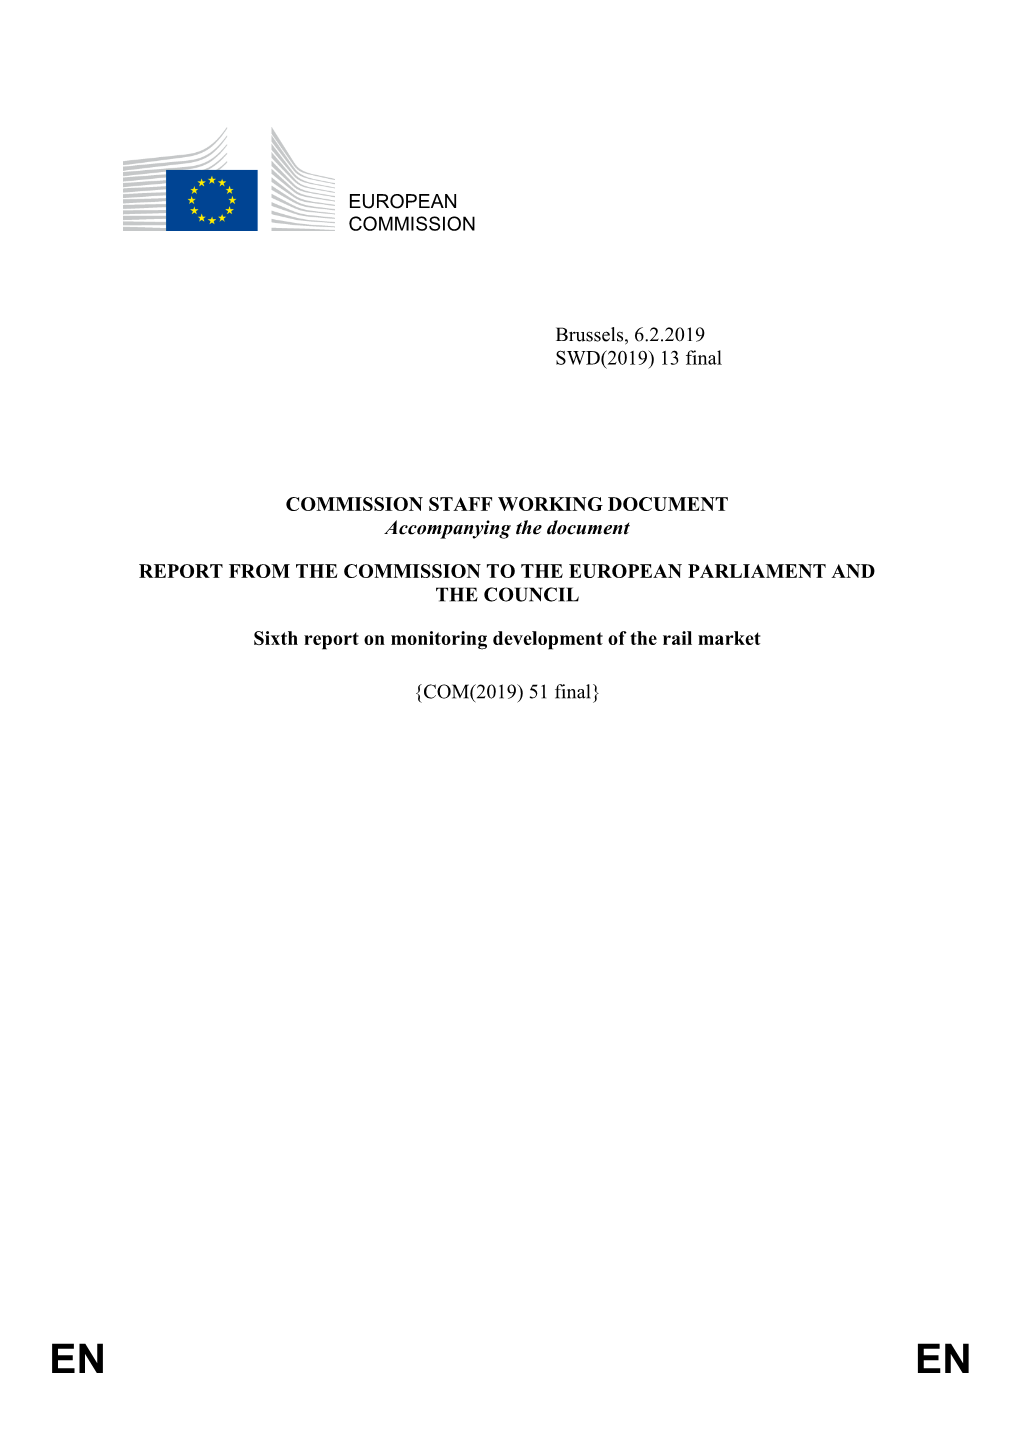 EUROPEAN COMMISSION Brussels, 6.2.2019 SWD(2019) 13 Final